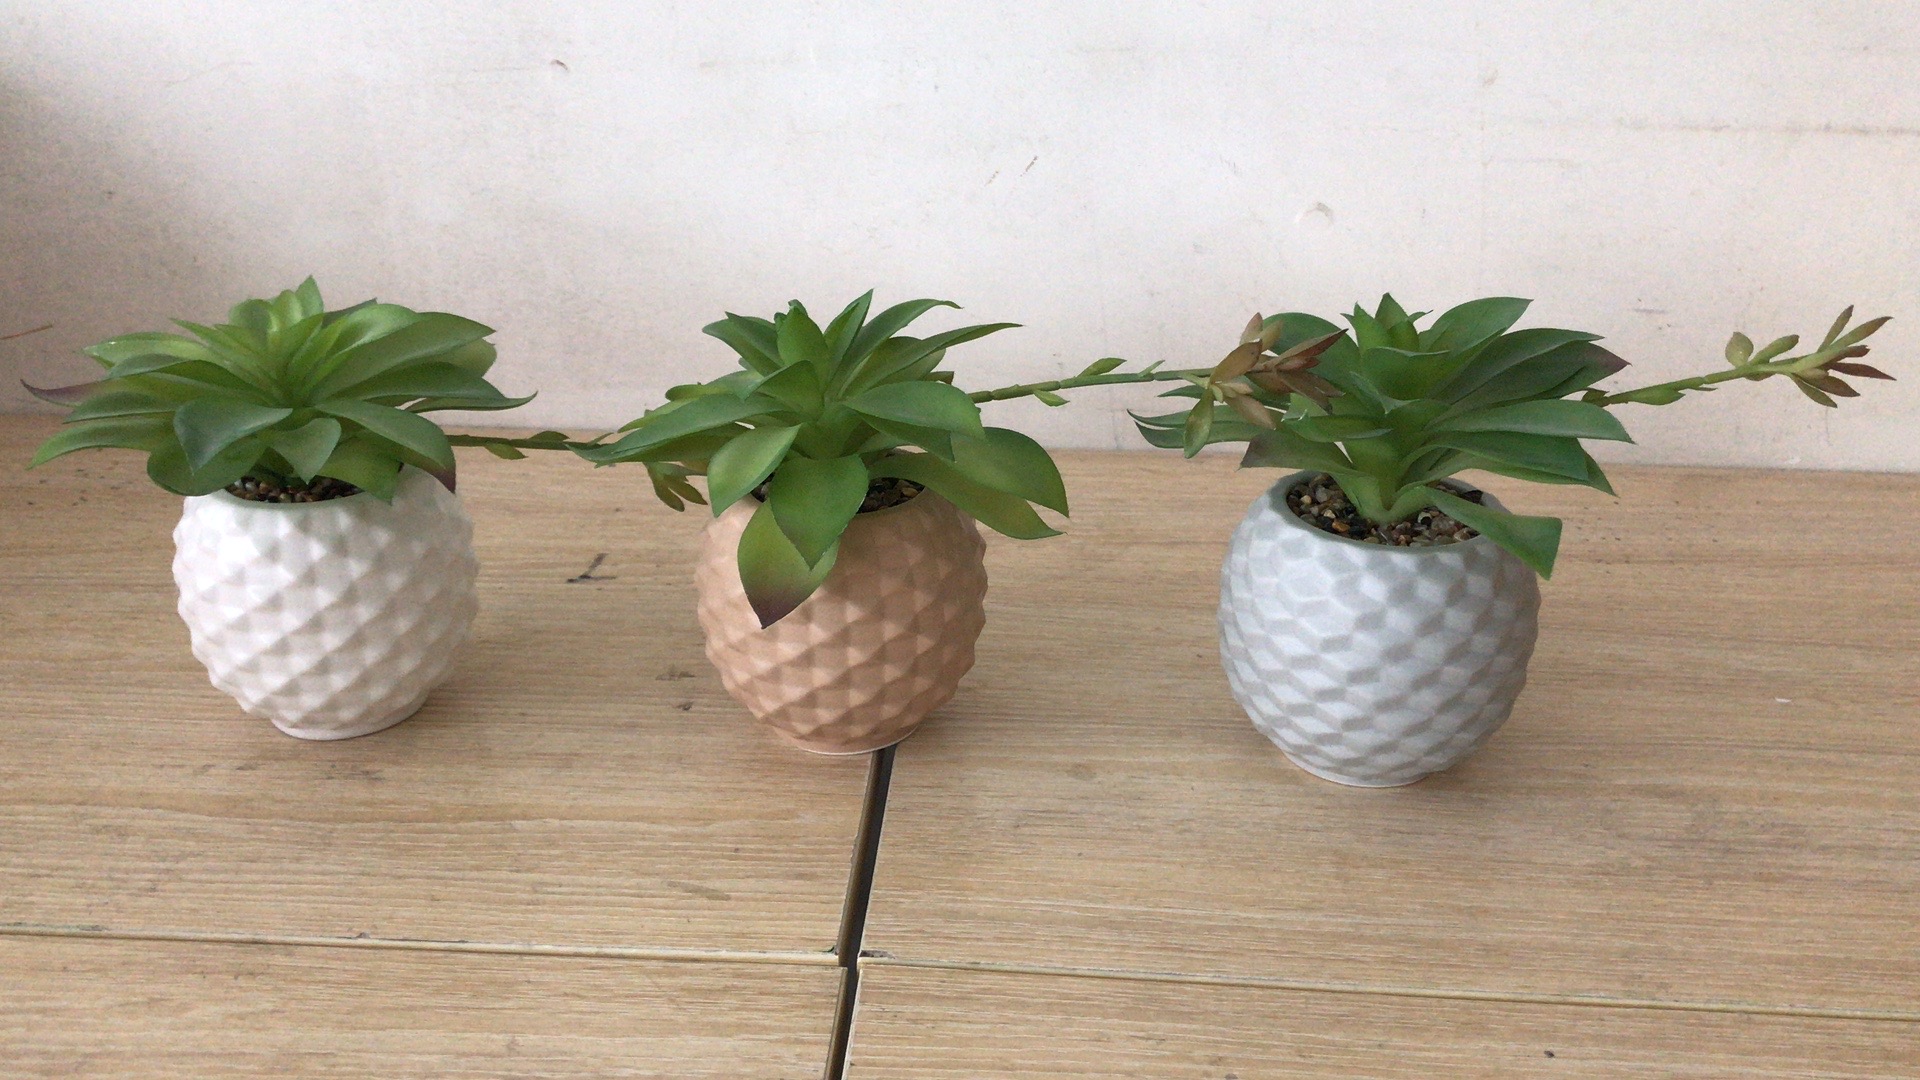 Ceramic Plant Pots sets of 3